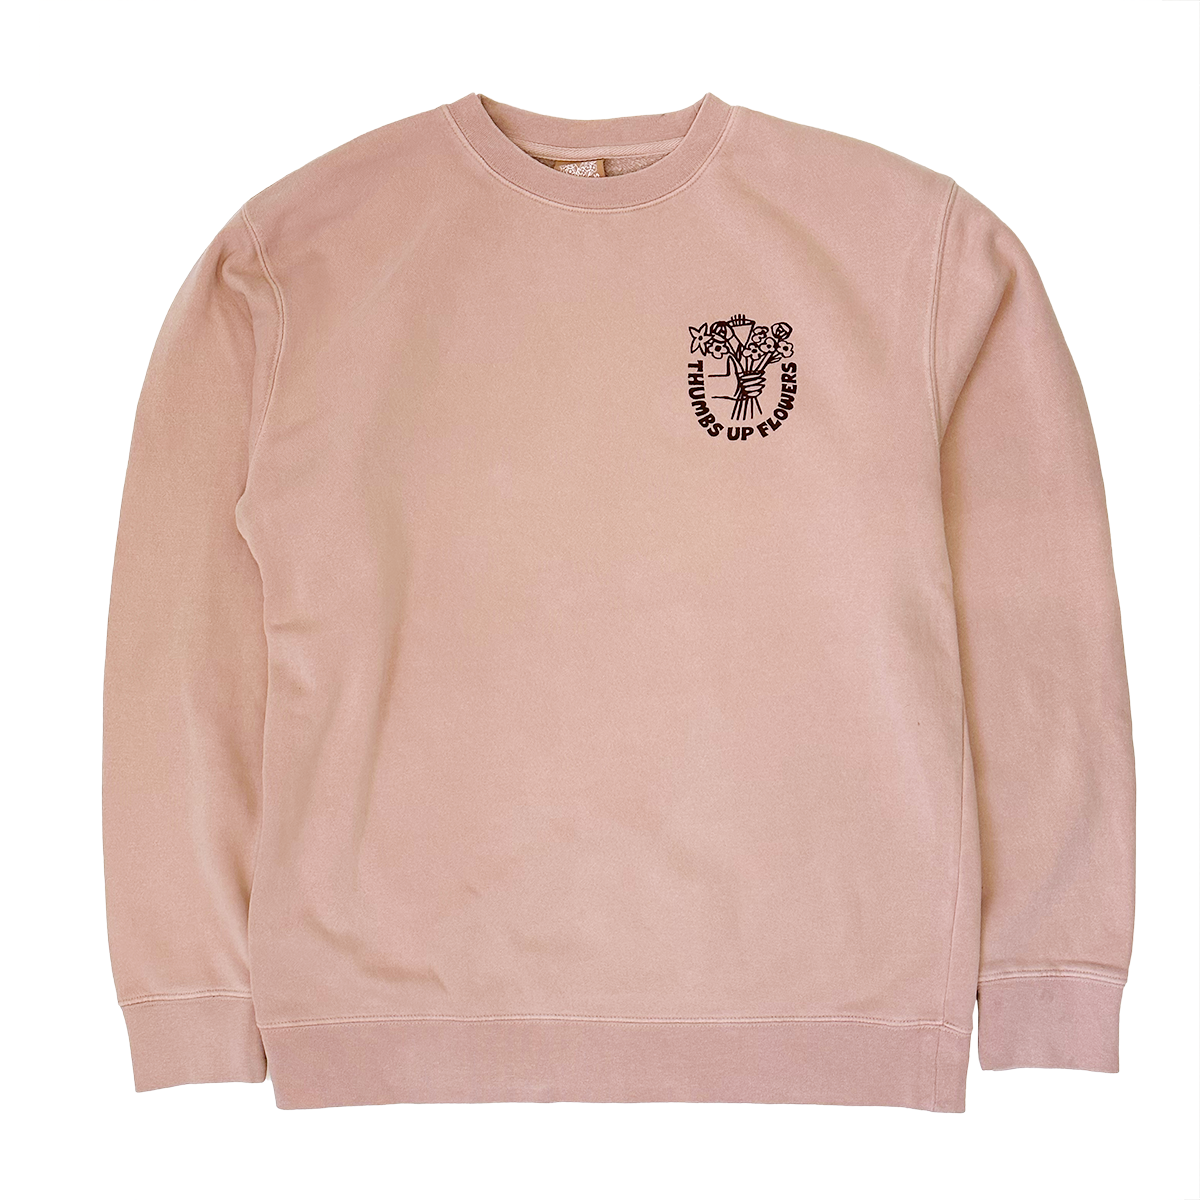 TUF Sweatshirt - Dusty Pink